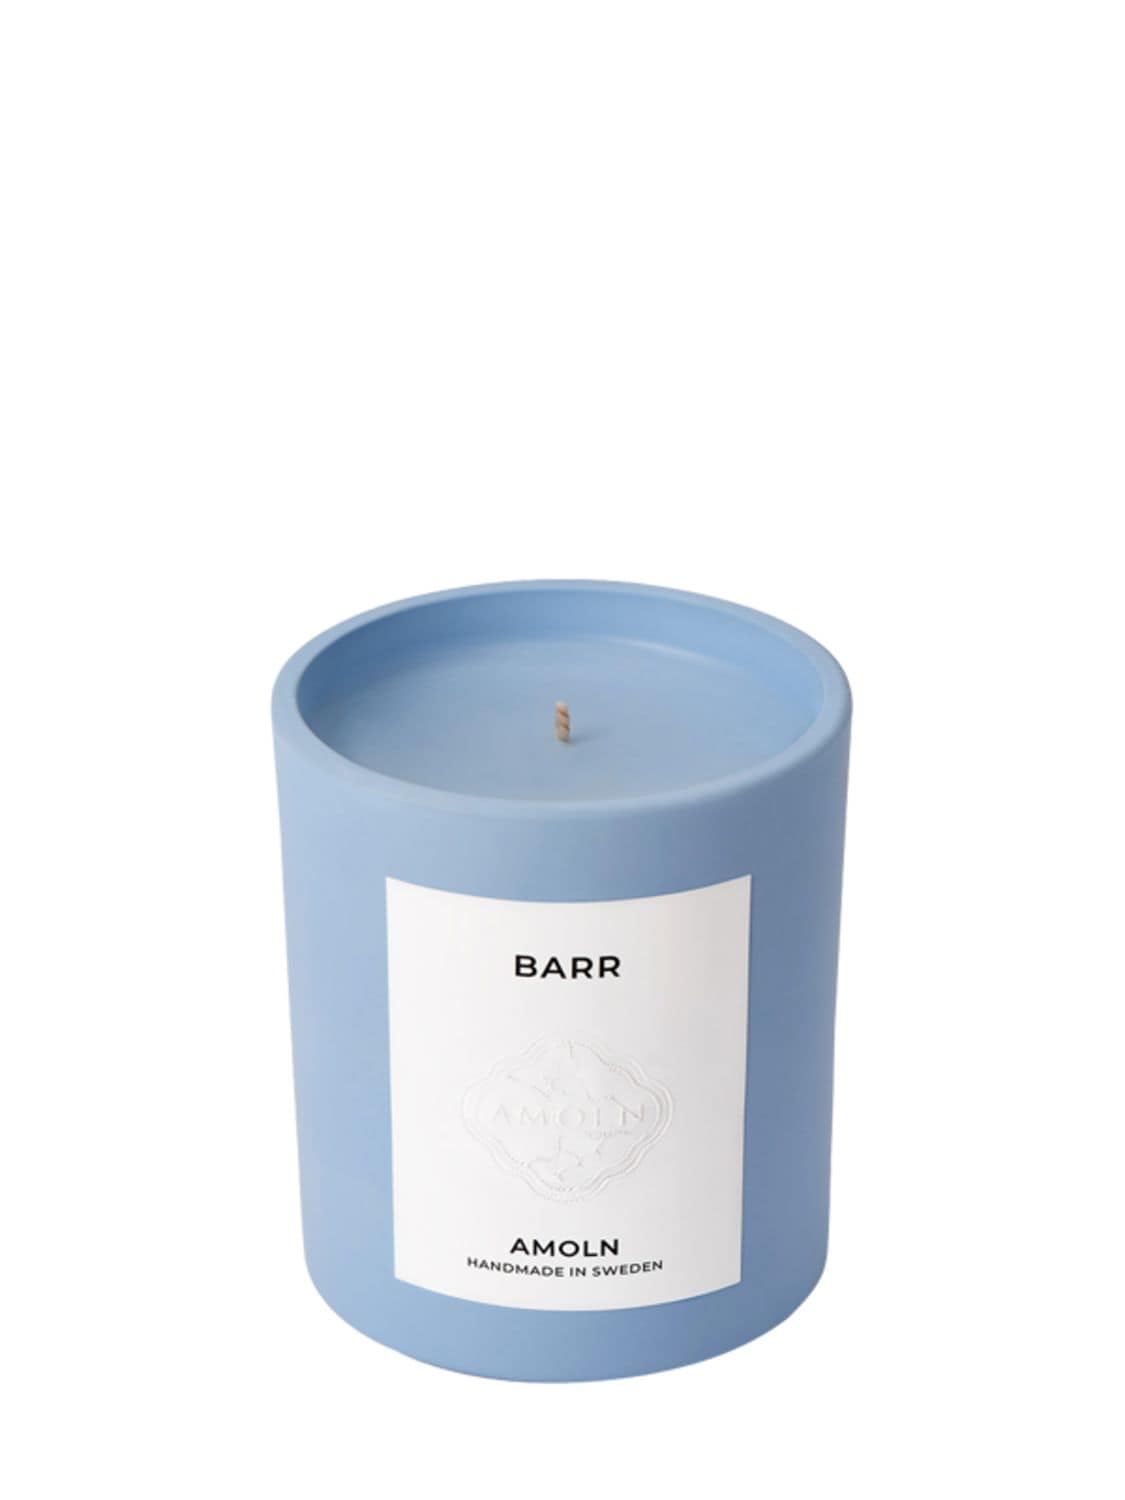 Amoln “barr”香氛蜡烛 In Blue